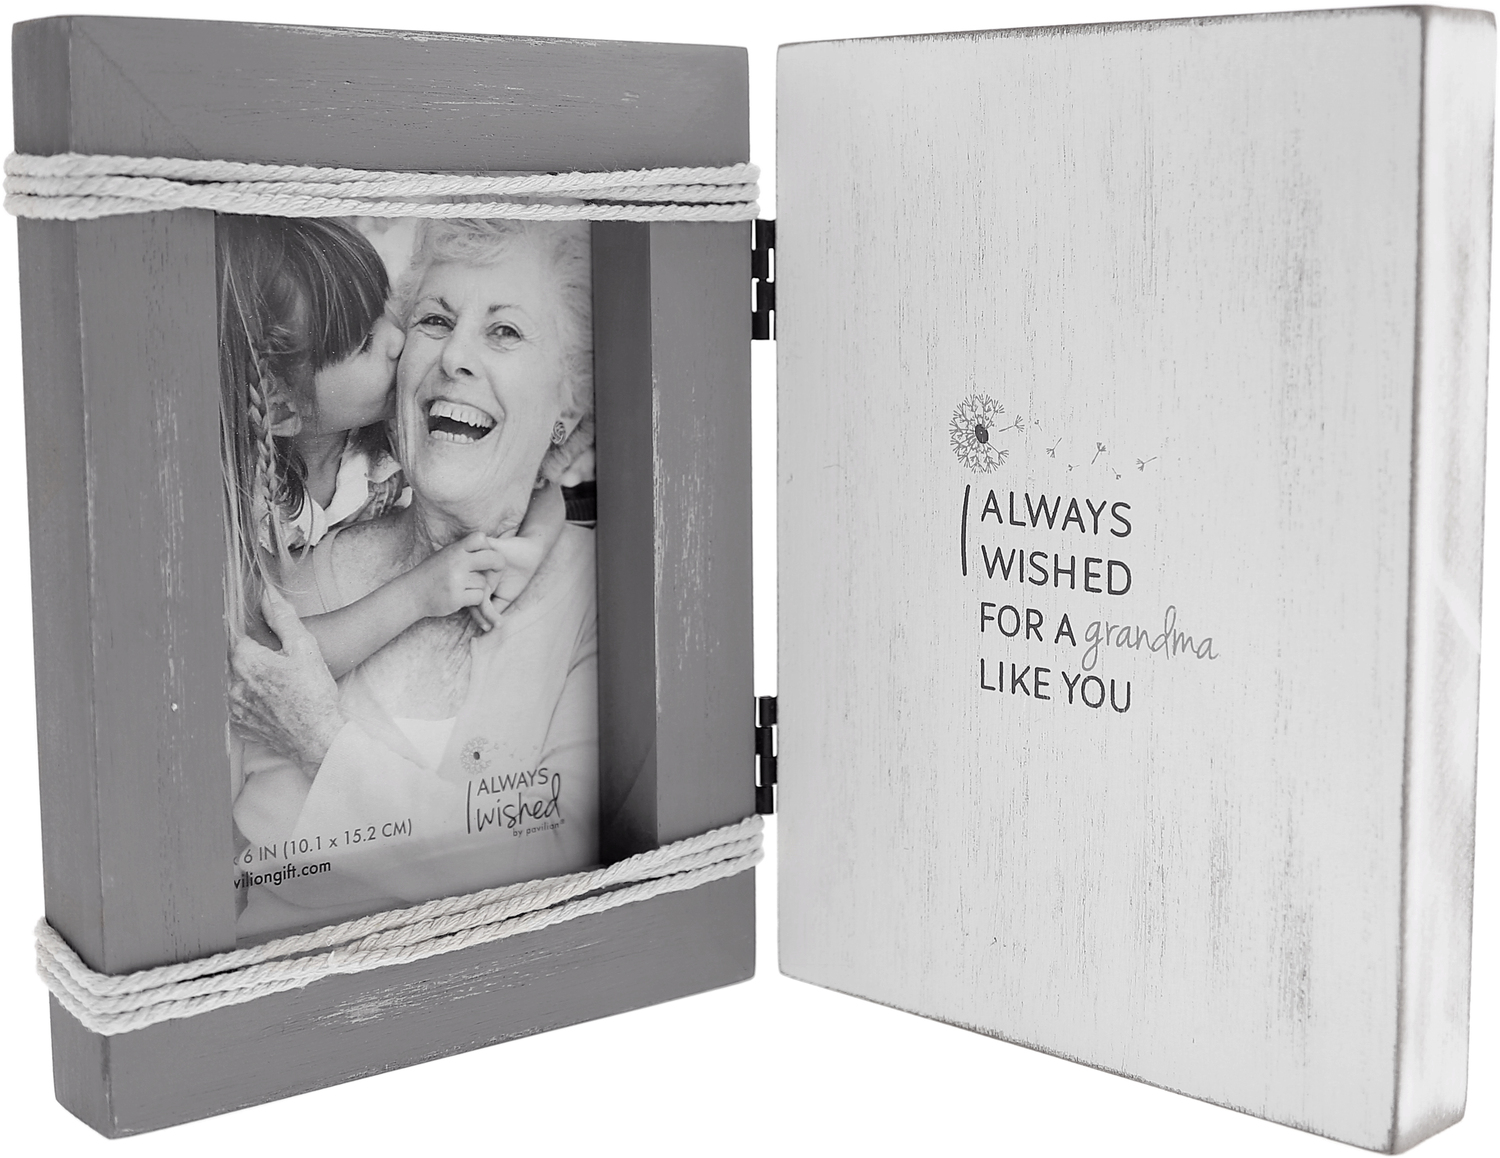 Grandma Like You by I Always Wished - Grandma Like You - 5.5" x 7.5" Hinged Sentiment Frame (Holds 4" x 6" Photo)